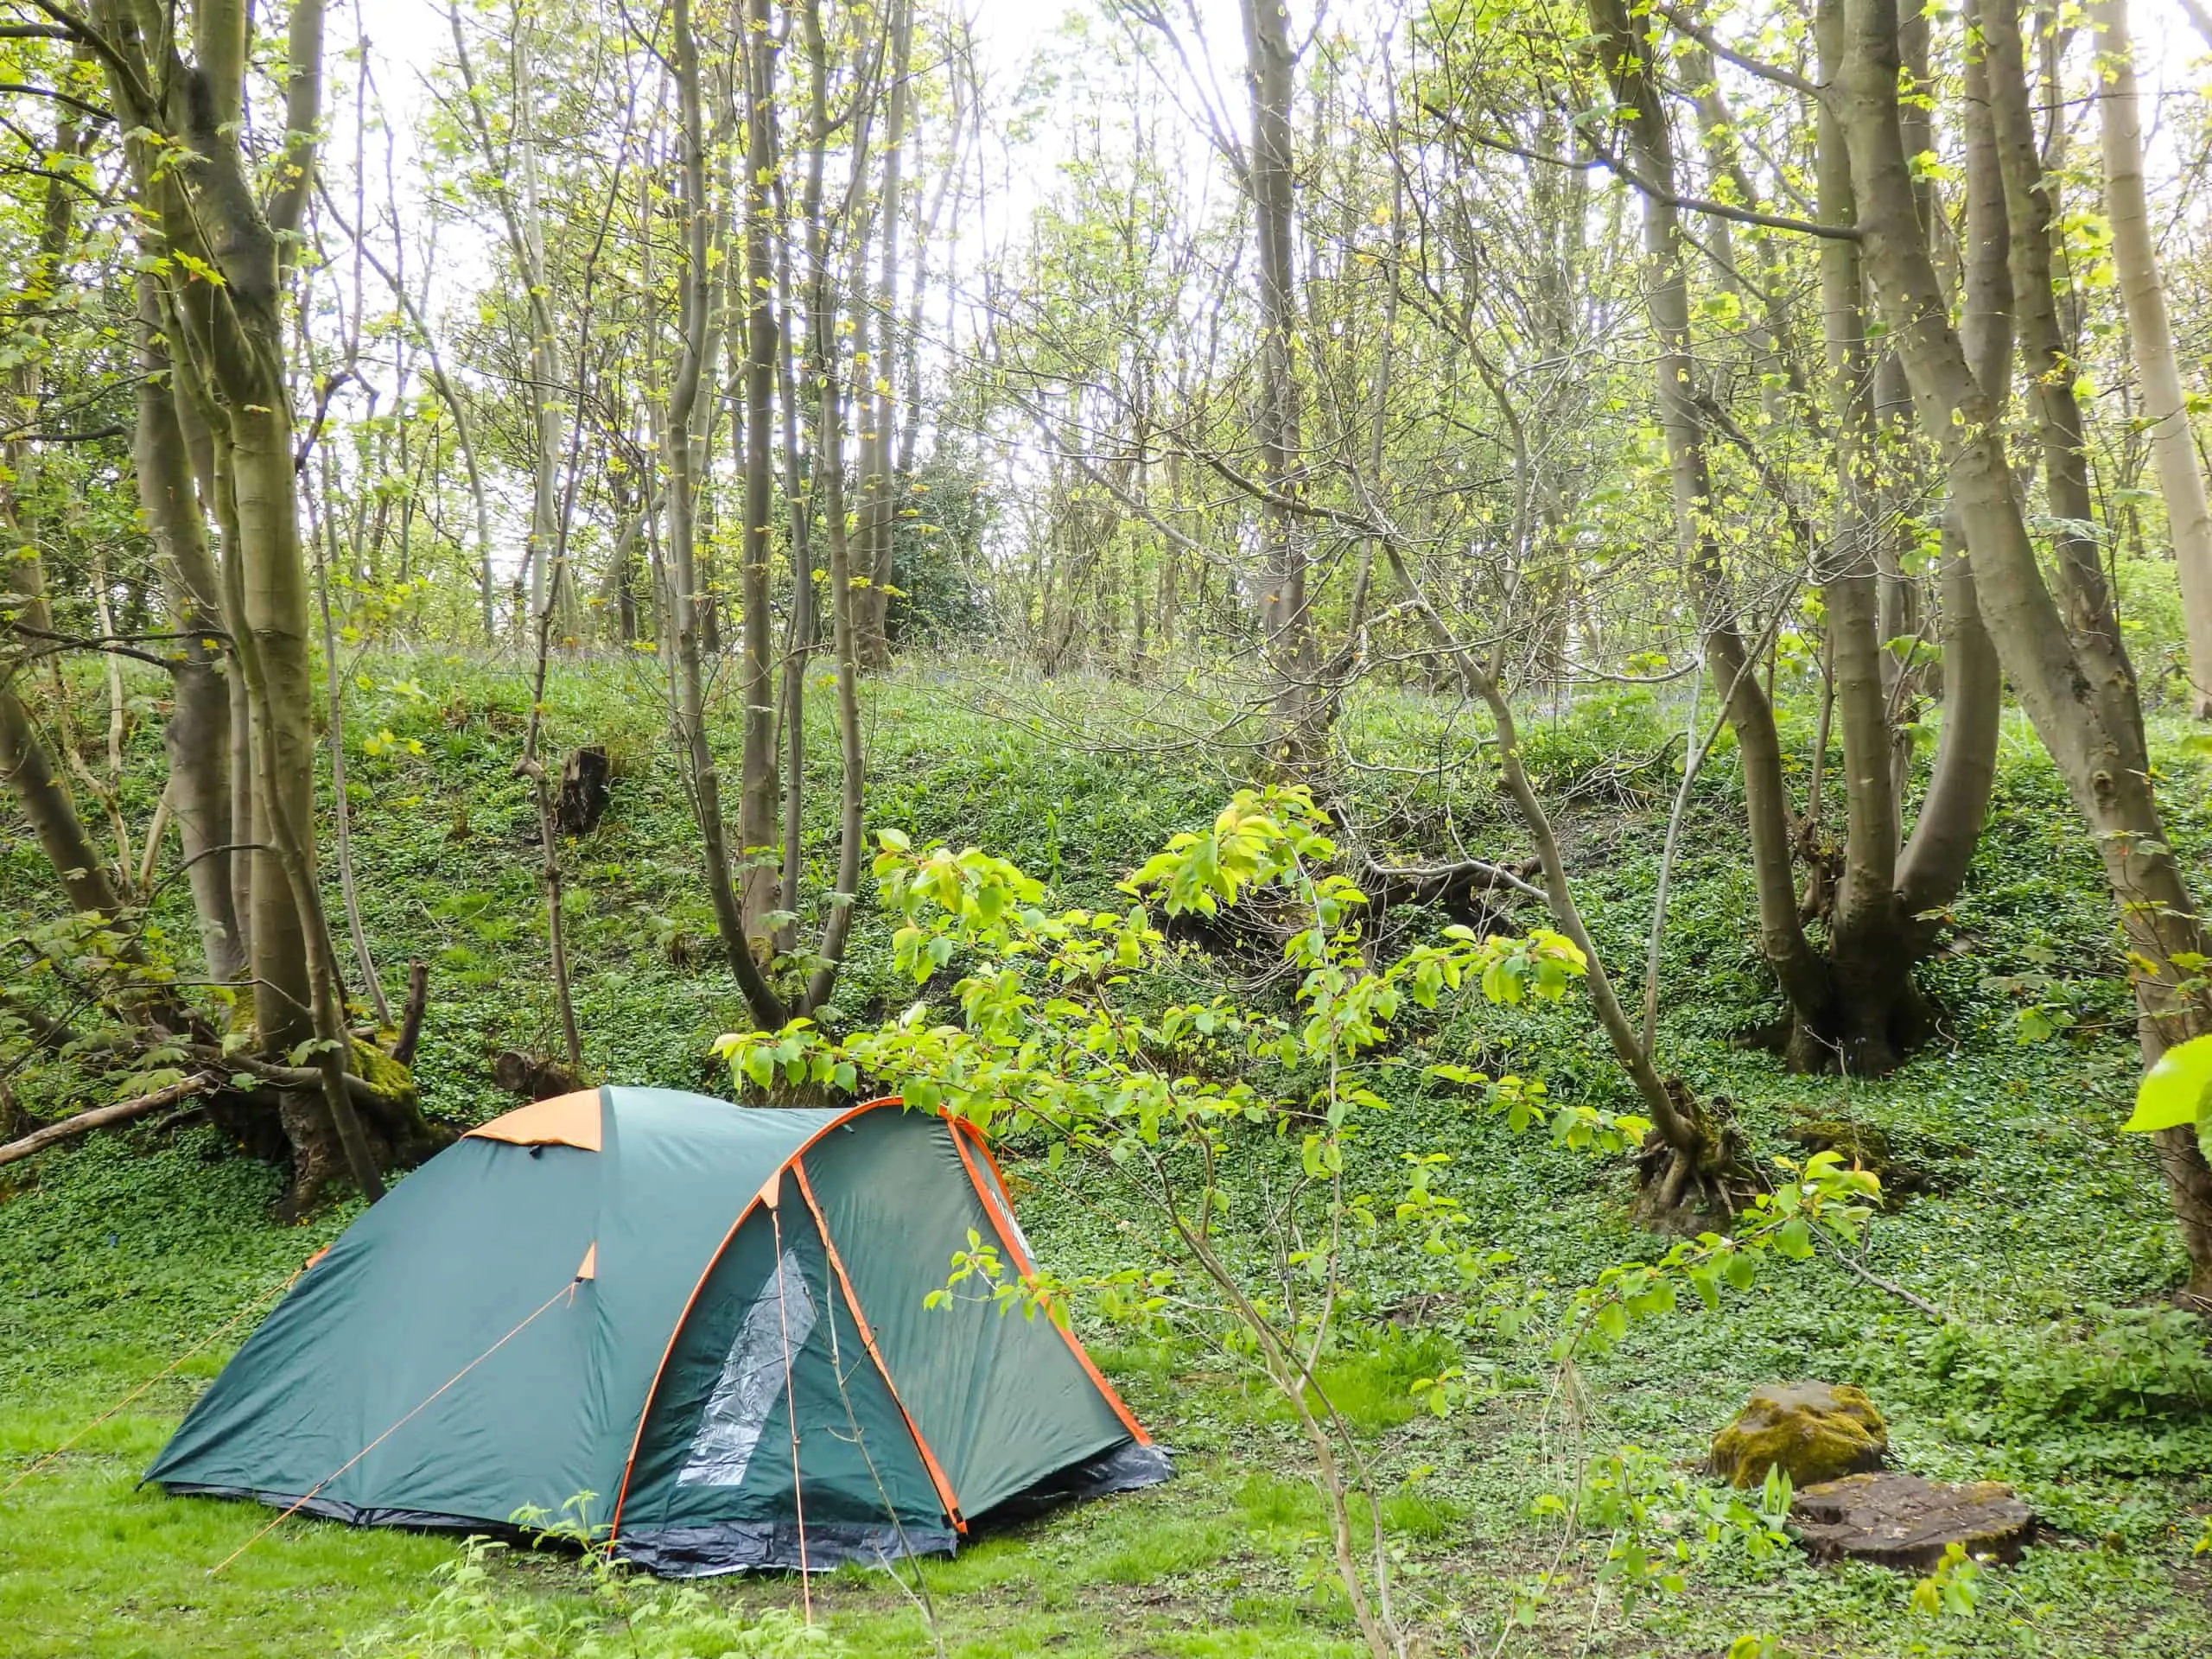 Campsites near Edinburgh